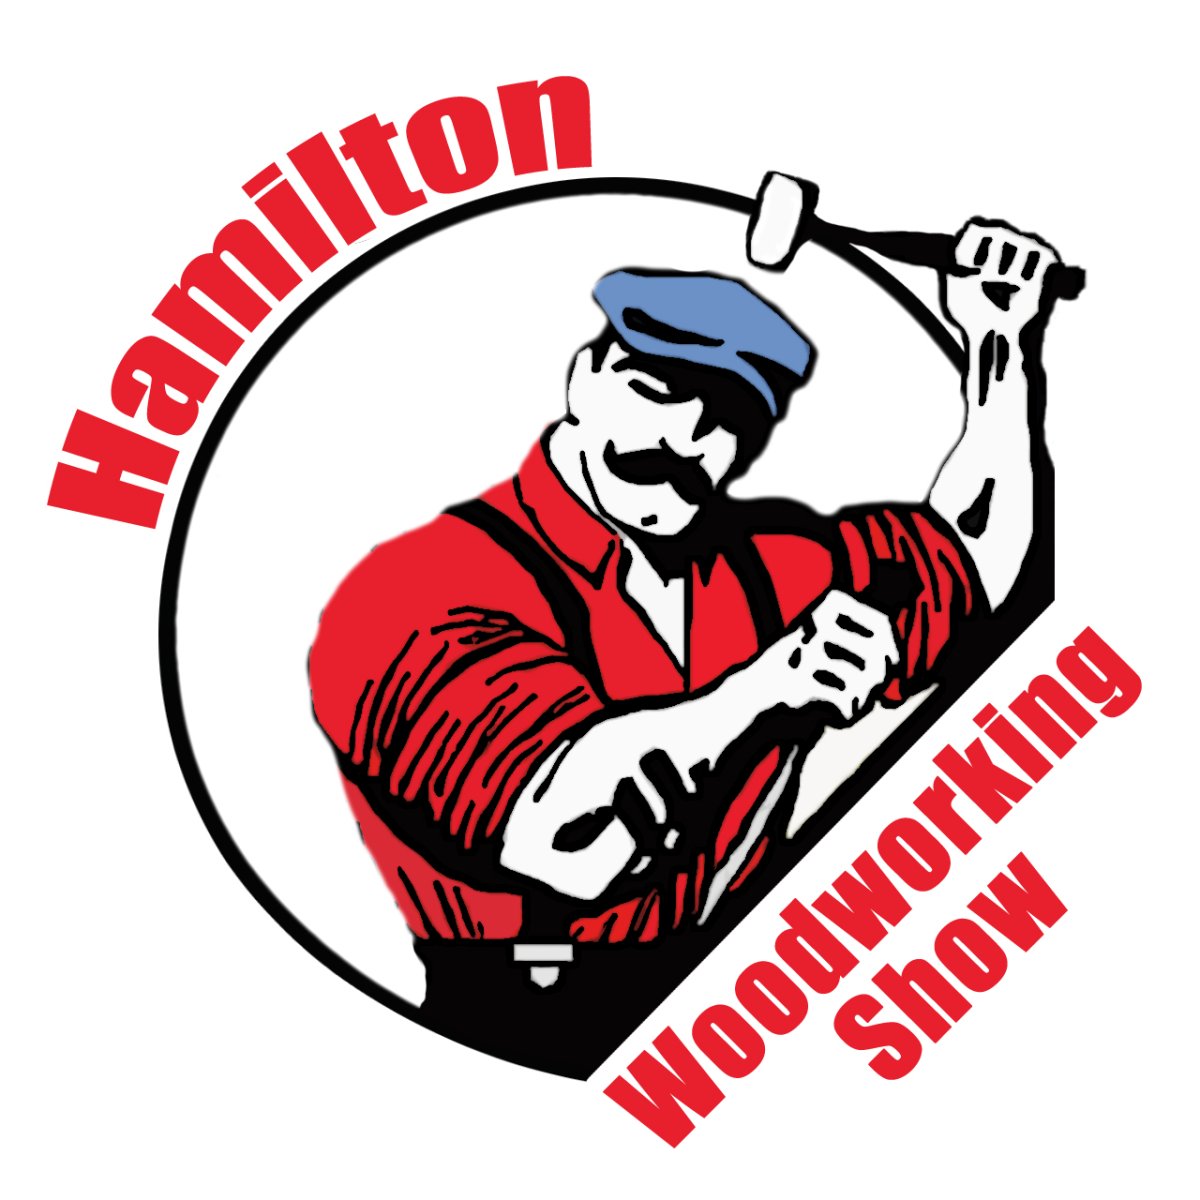 Hamilton Woodworking Show - image